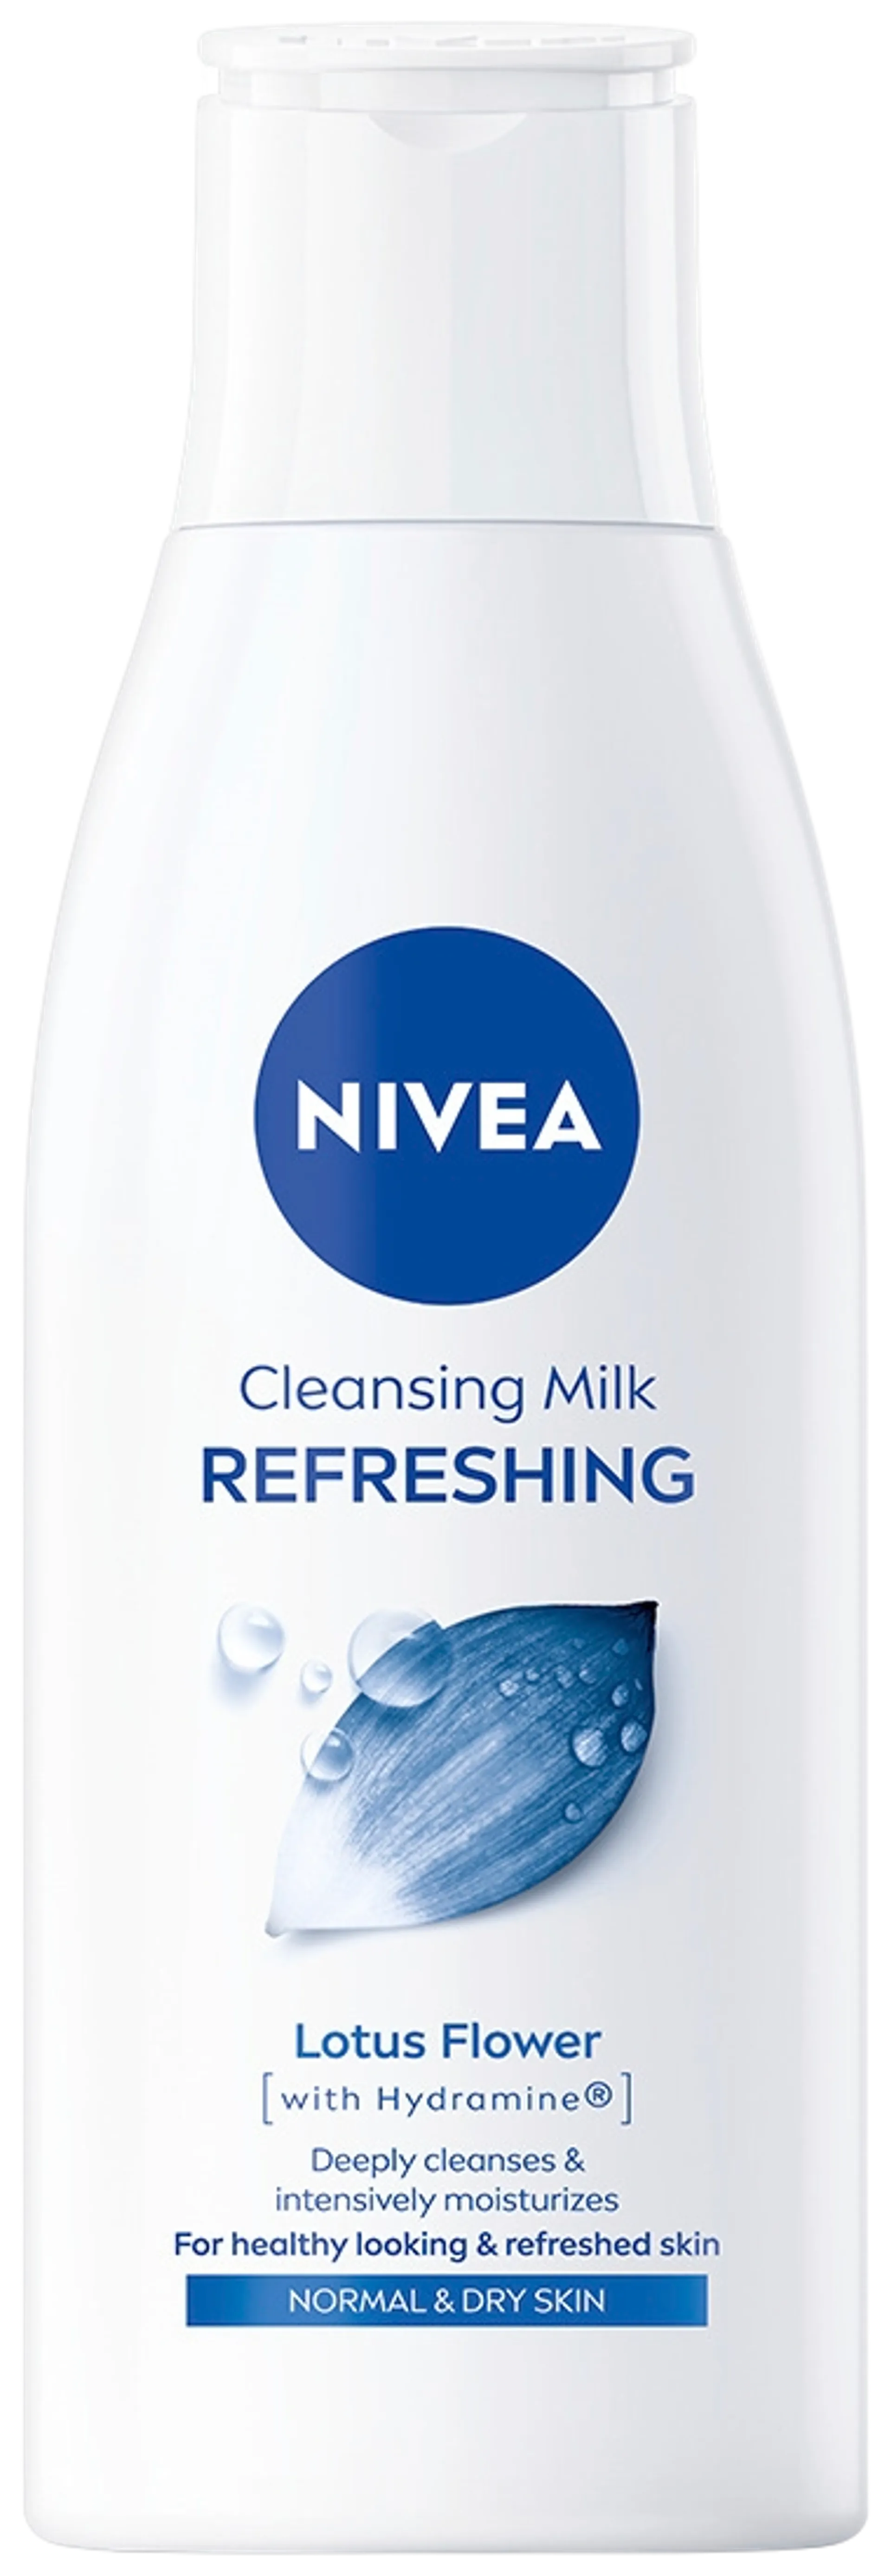 NIVEA 200ml Refreshing Cleansing Milk -puhdistusemulsio